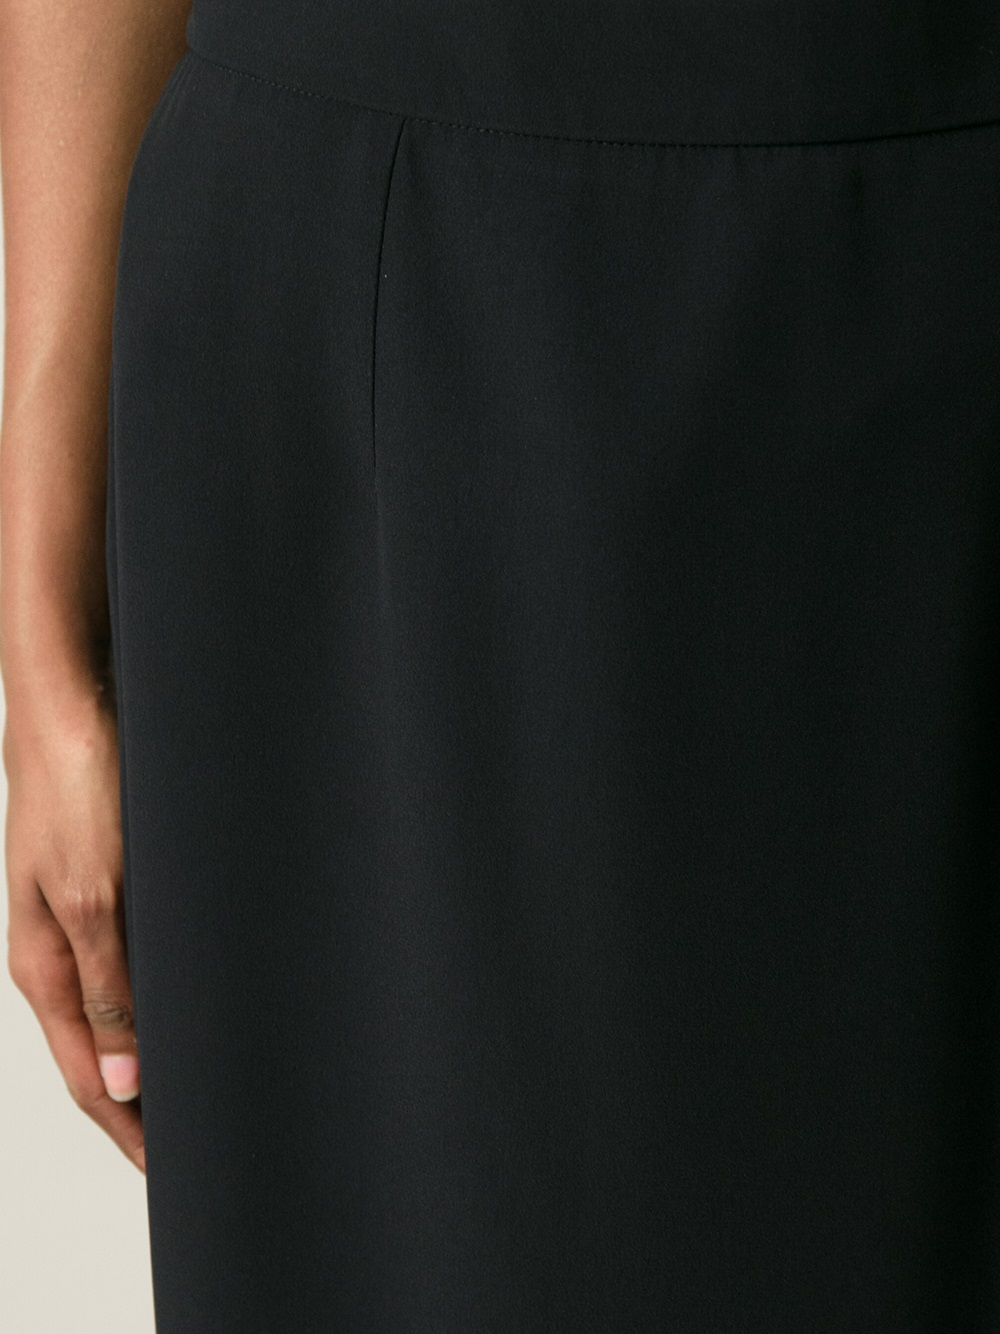 Alexander McQueen Maxi Pencil Skirt in Black - Lyst